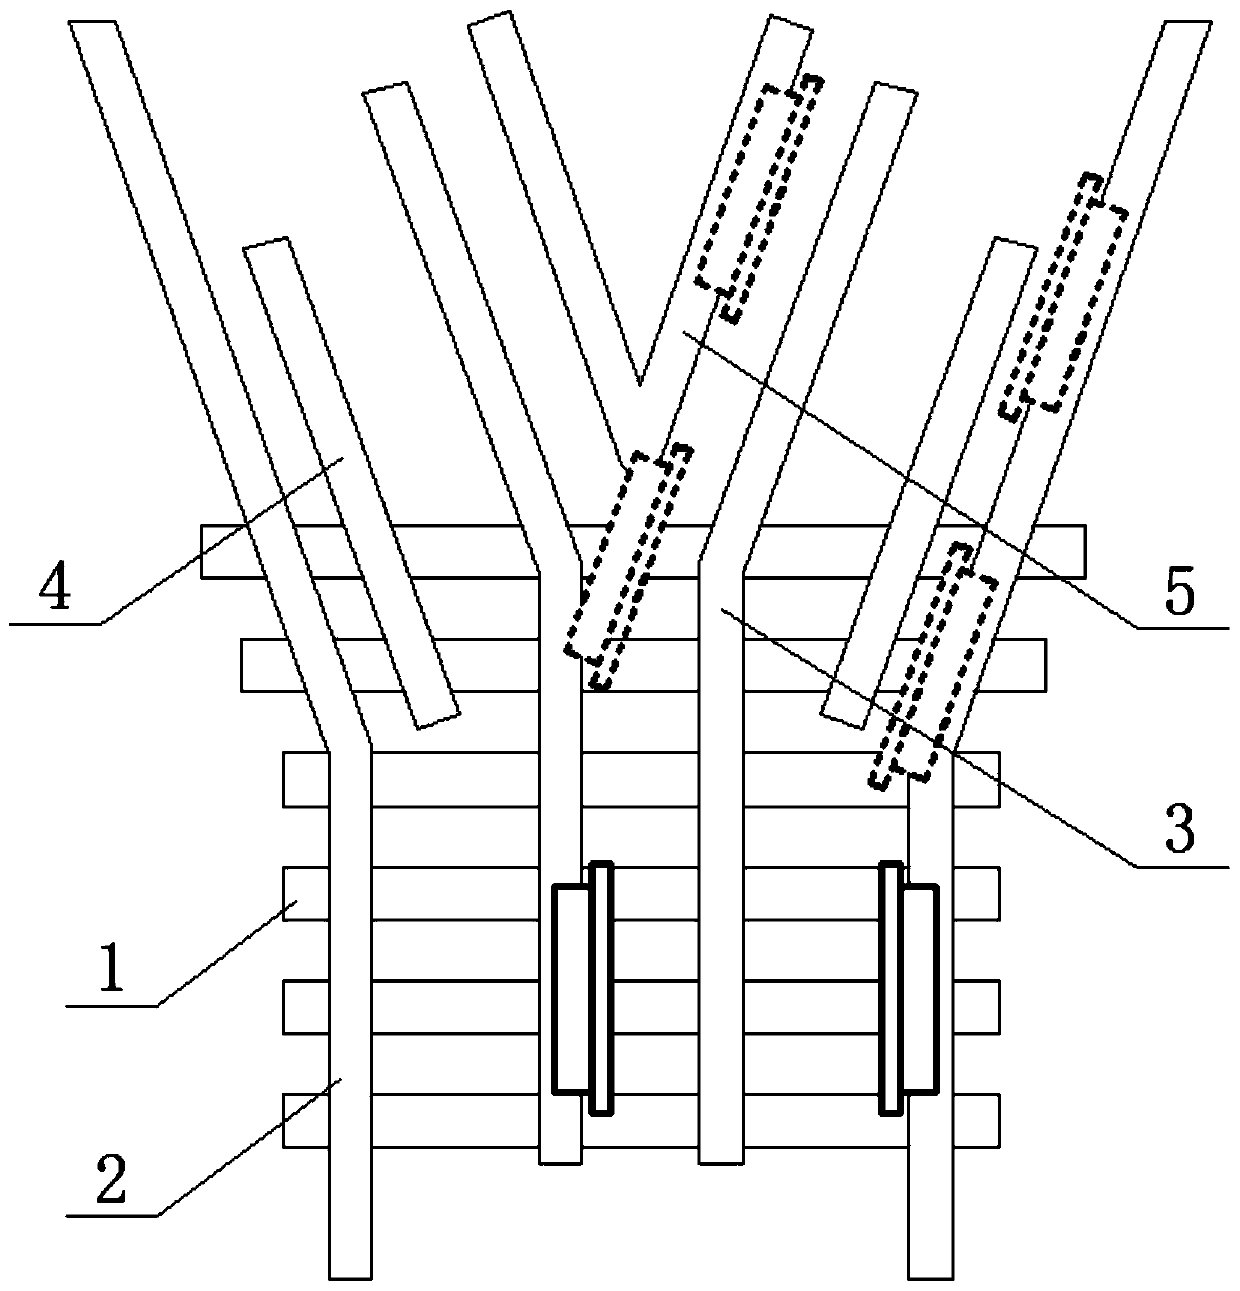 Train hub steering self-correcting assembly